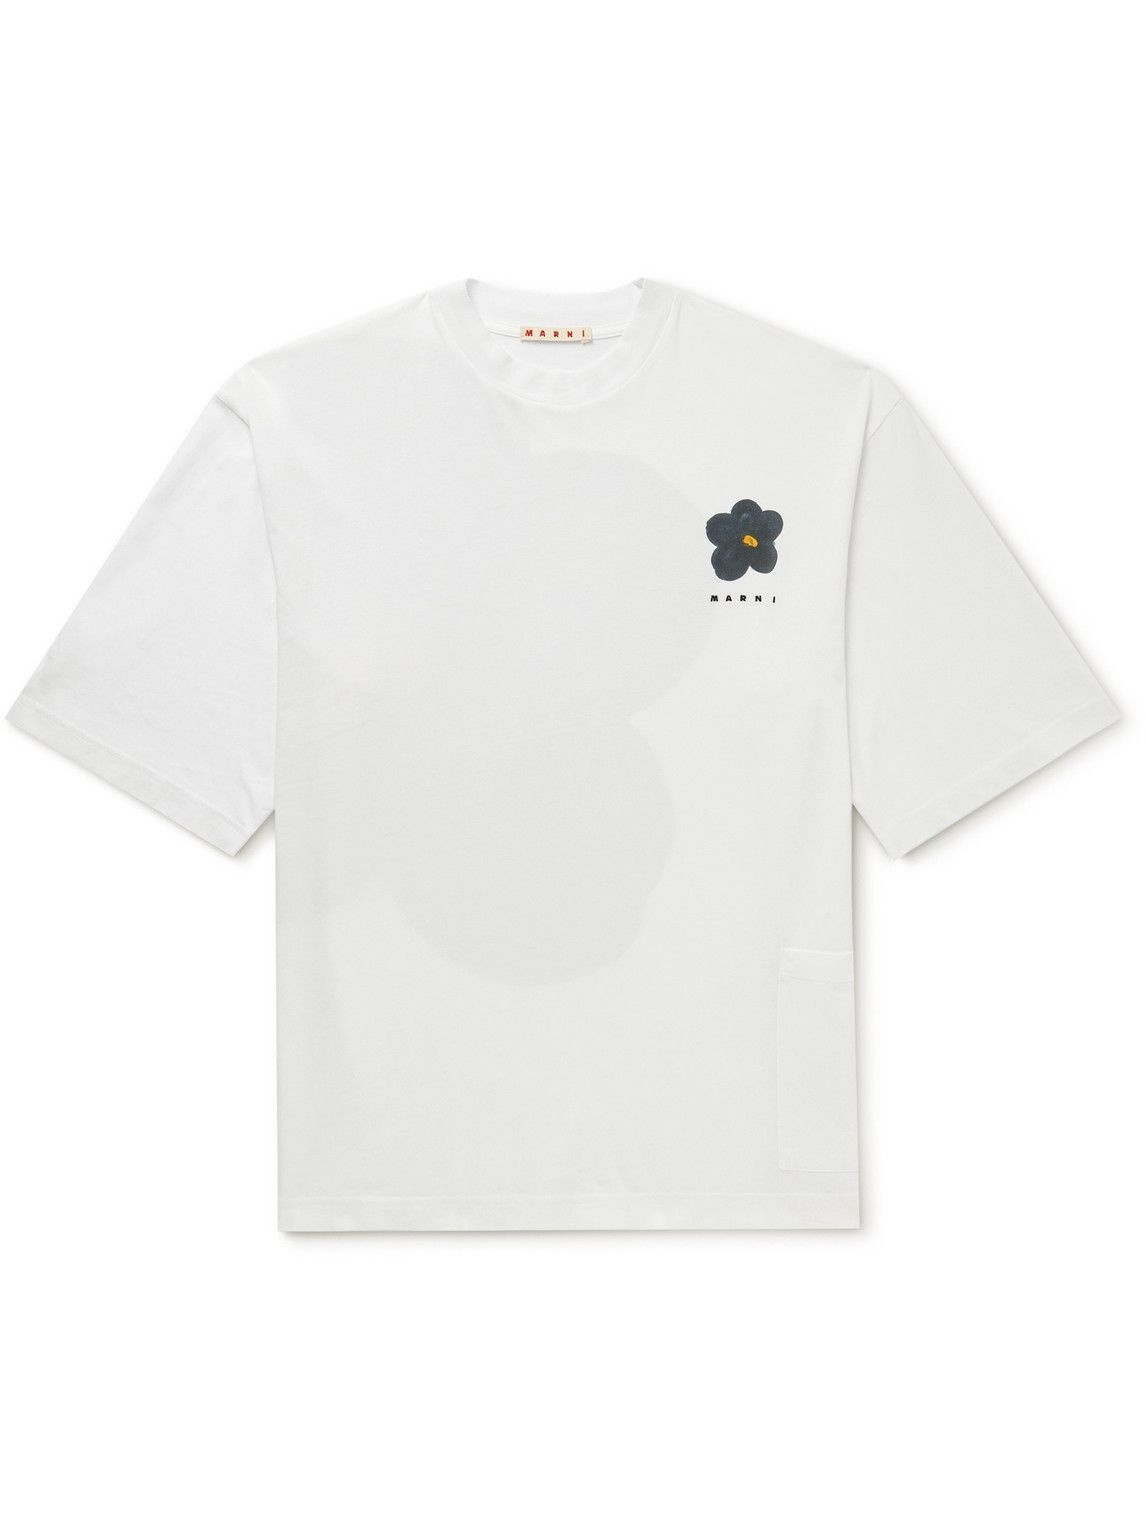 Marni - Floral-Print Cotton-Jersey T-Shirt - White Marni